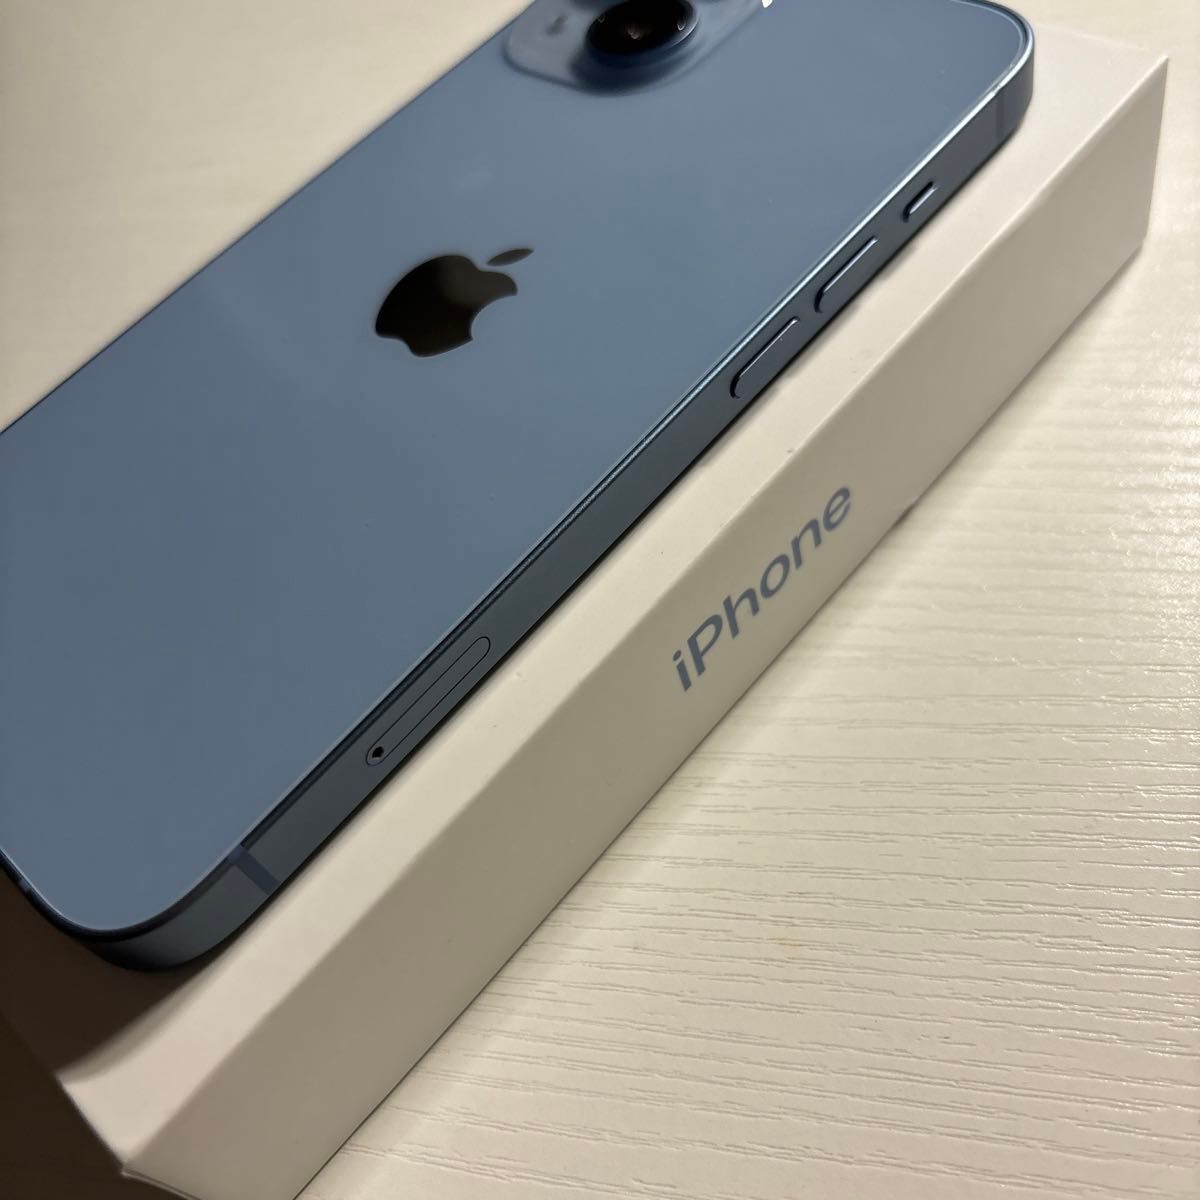 iPhone 14 128GB ブルー SIMフリー